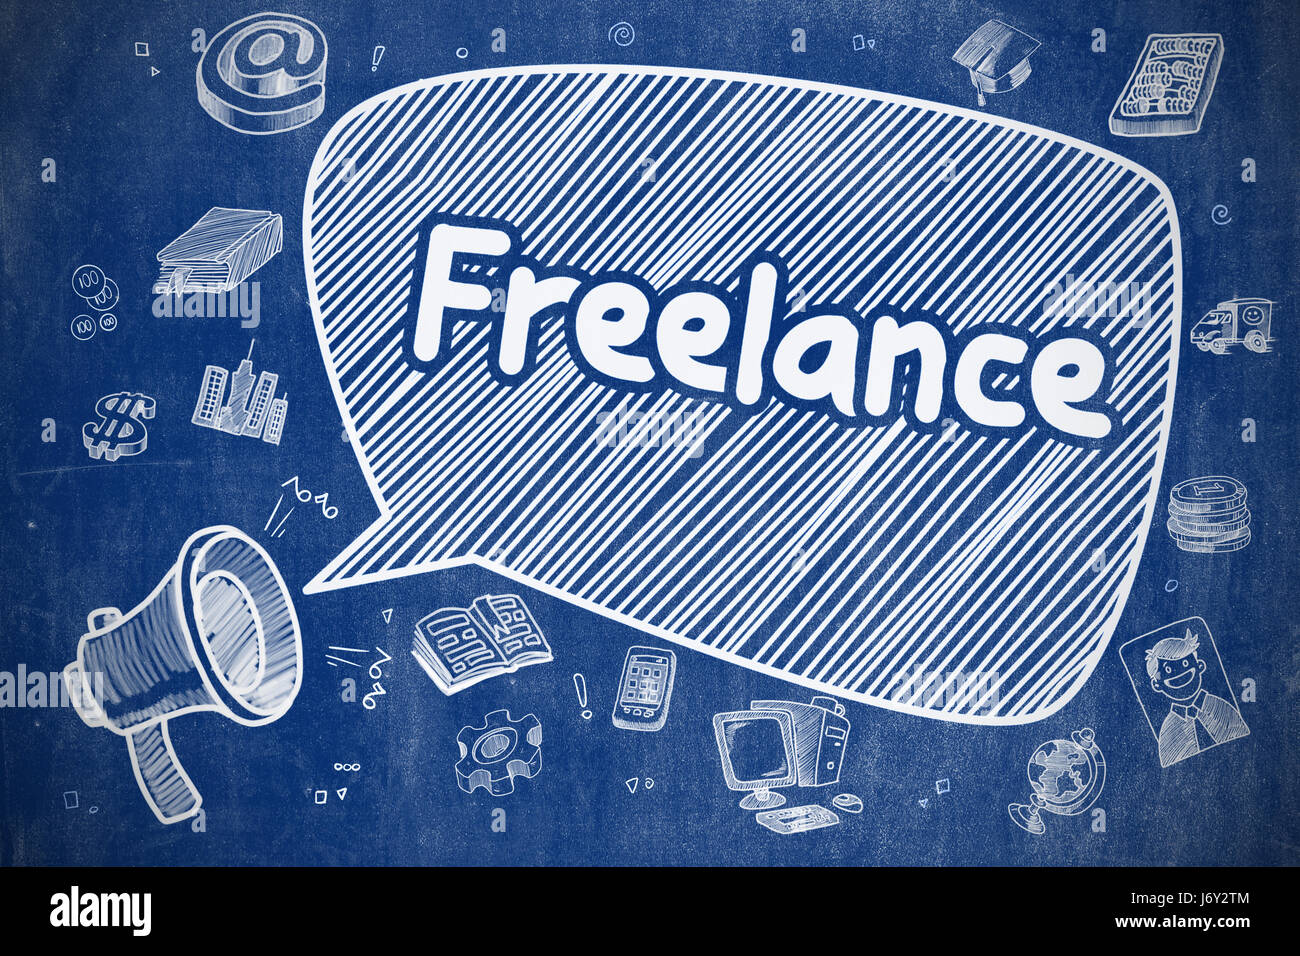 Freelance - Ilustración dibujada a mano en azul pizarra. Foto de stock